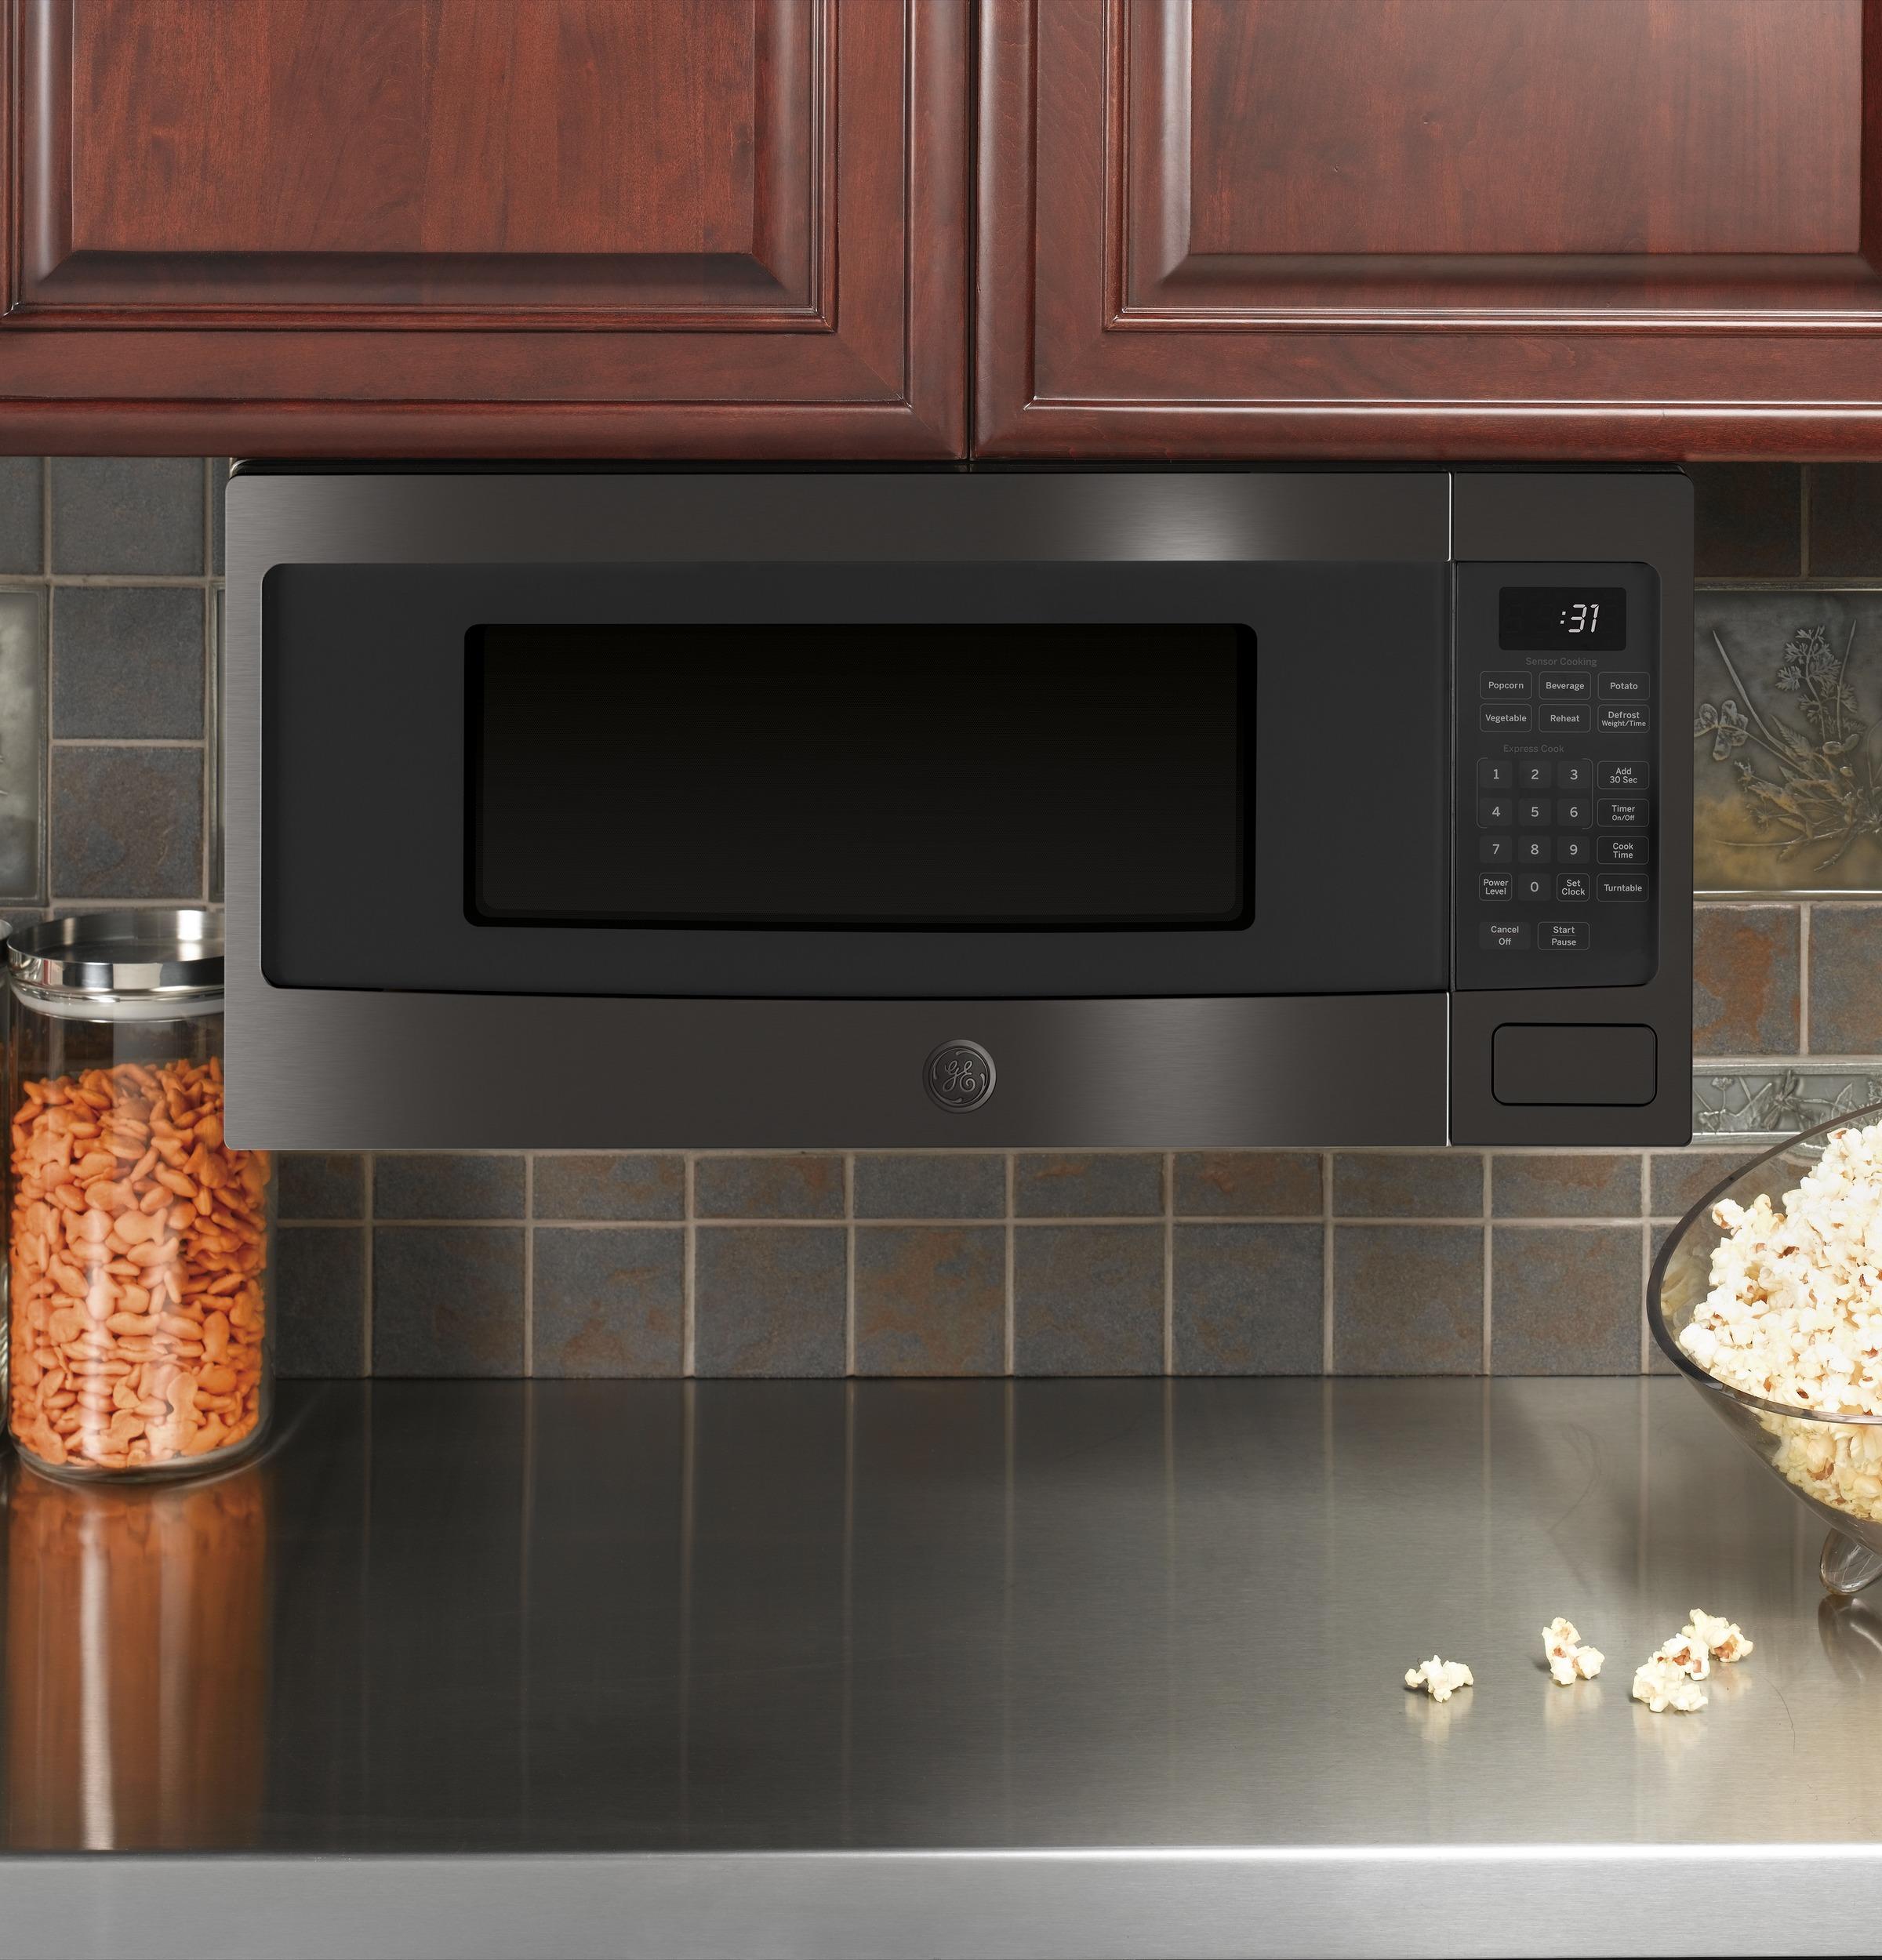 GE Profile™ 1.1 Cu. Ft. Countertop Microwave Oven